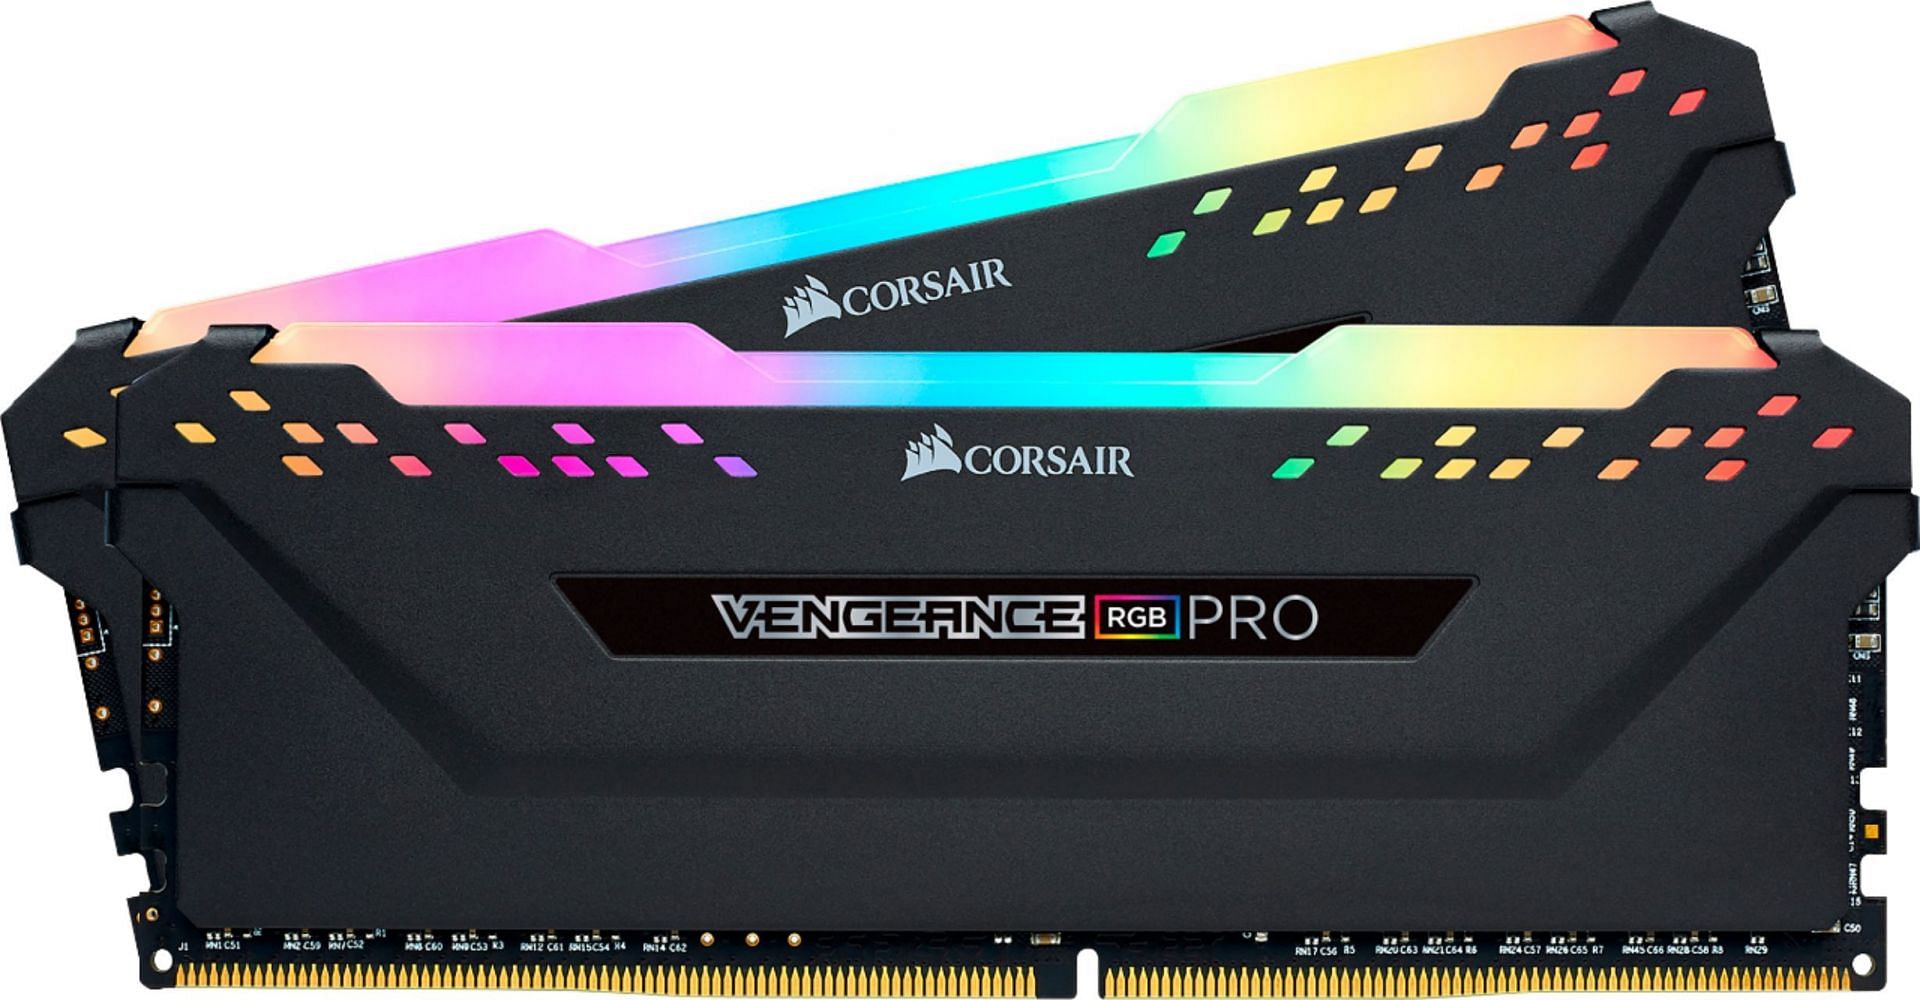 The Corsair Vengeance Pro 32 GB 3600 MHz (Image via Best Buy)